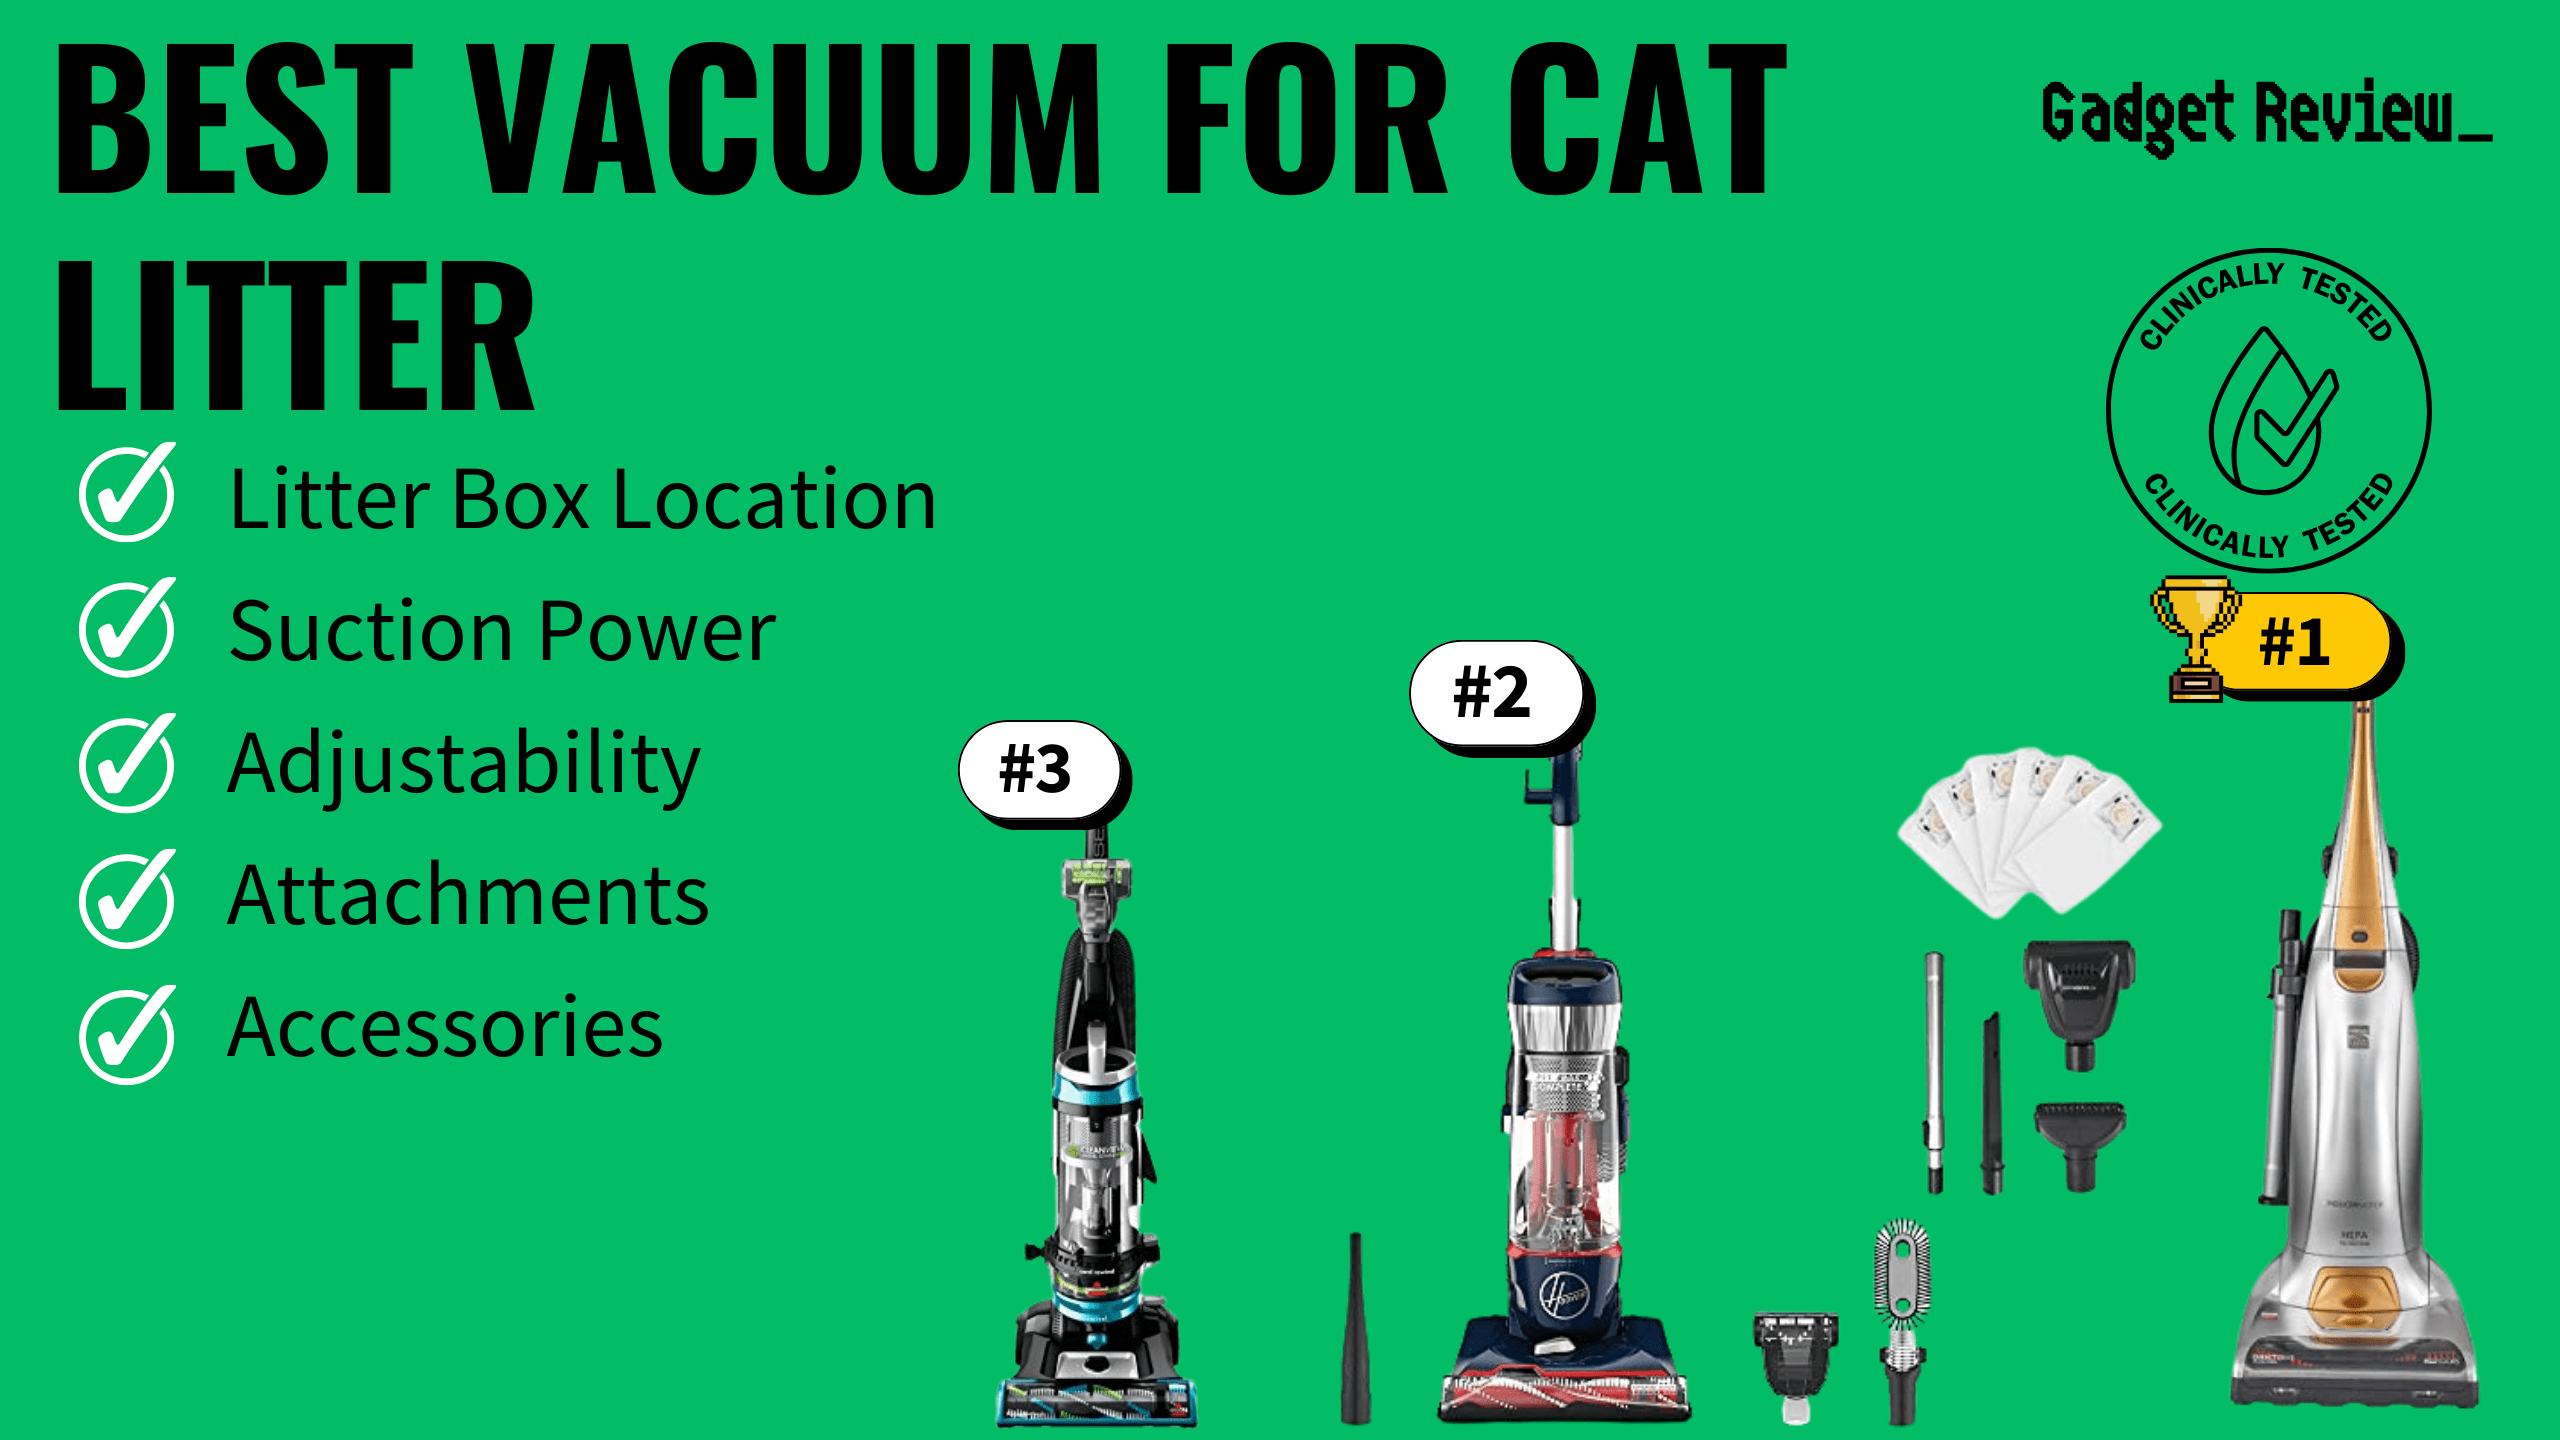 Best Vacuums for Cat Litter